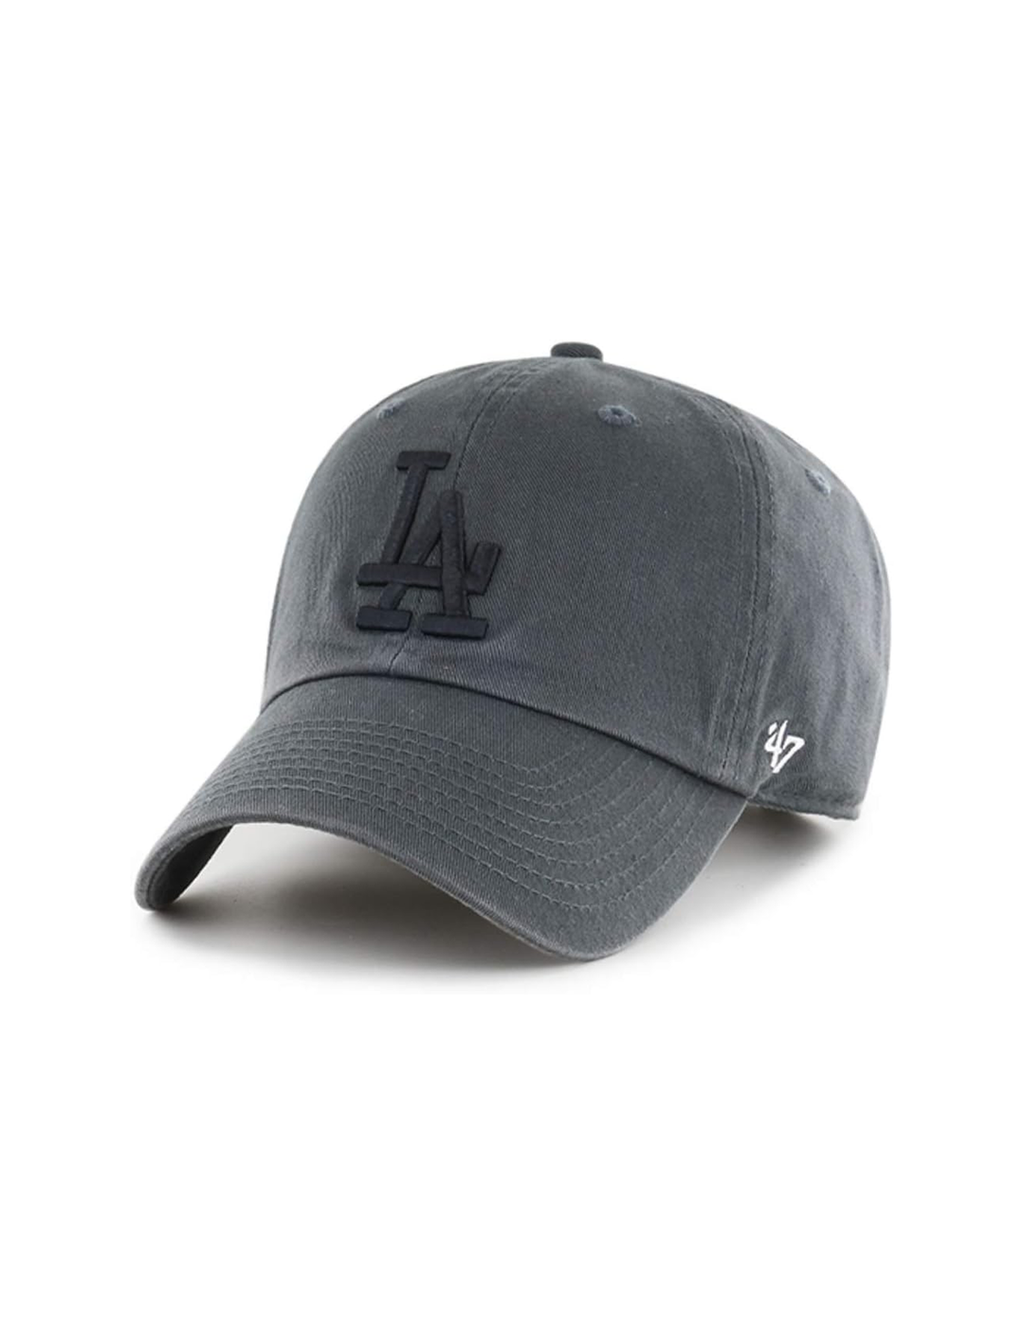 LA Dodgers Basic Ball Cap, Dark Gray/Black